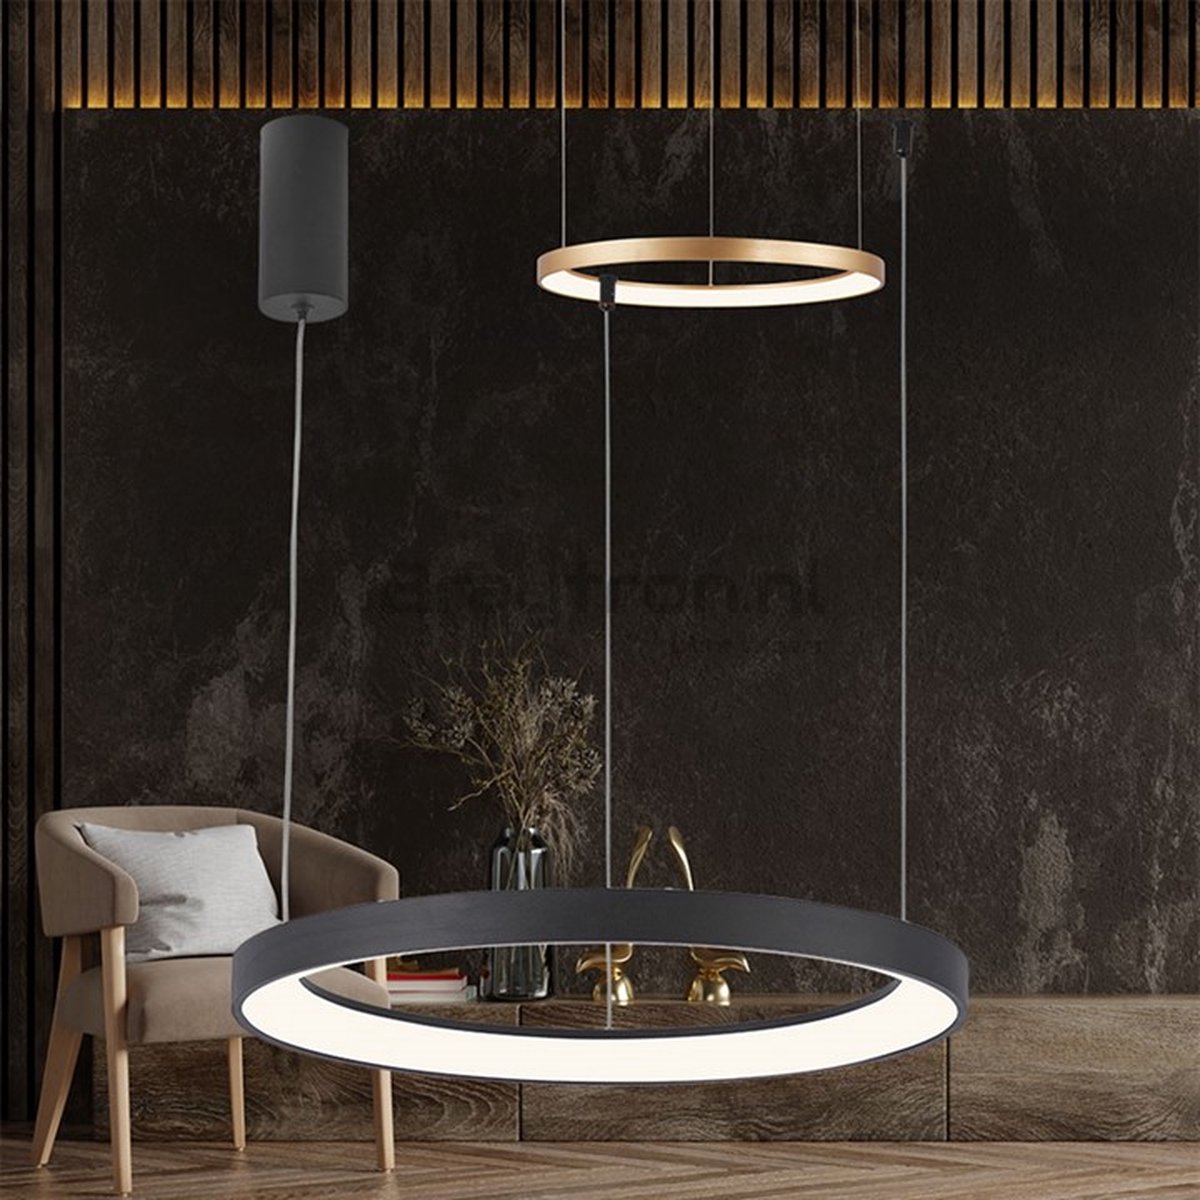 Braytron.nl | Decoratieve LED lamp BELLA | Ø48cm. | Zwarte ronde led hanglamp | 36W | 3in1 wit kleuren licht | 3 jaar garantie.